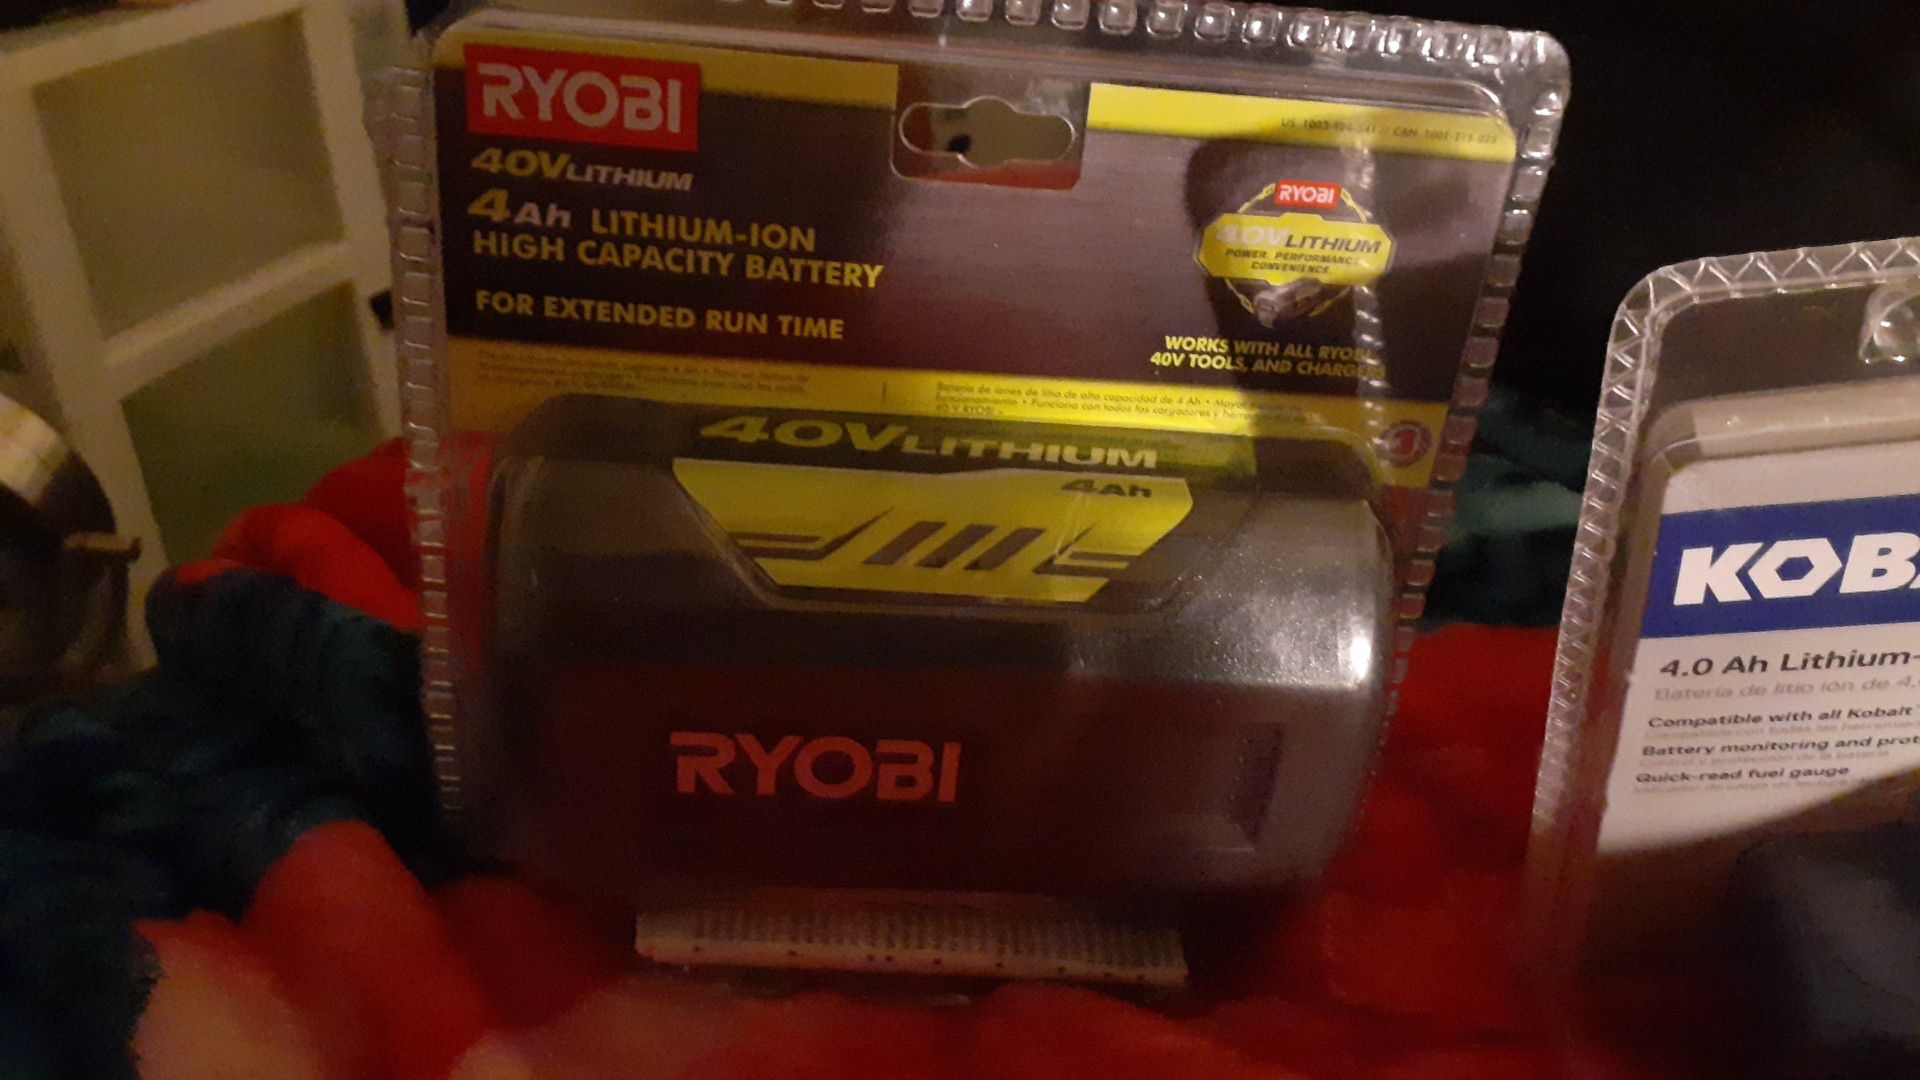 Ryobi 40v lithium ion 4ah battery